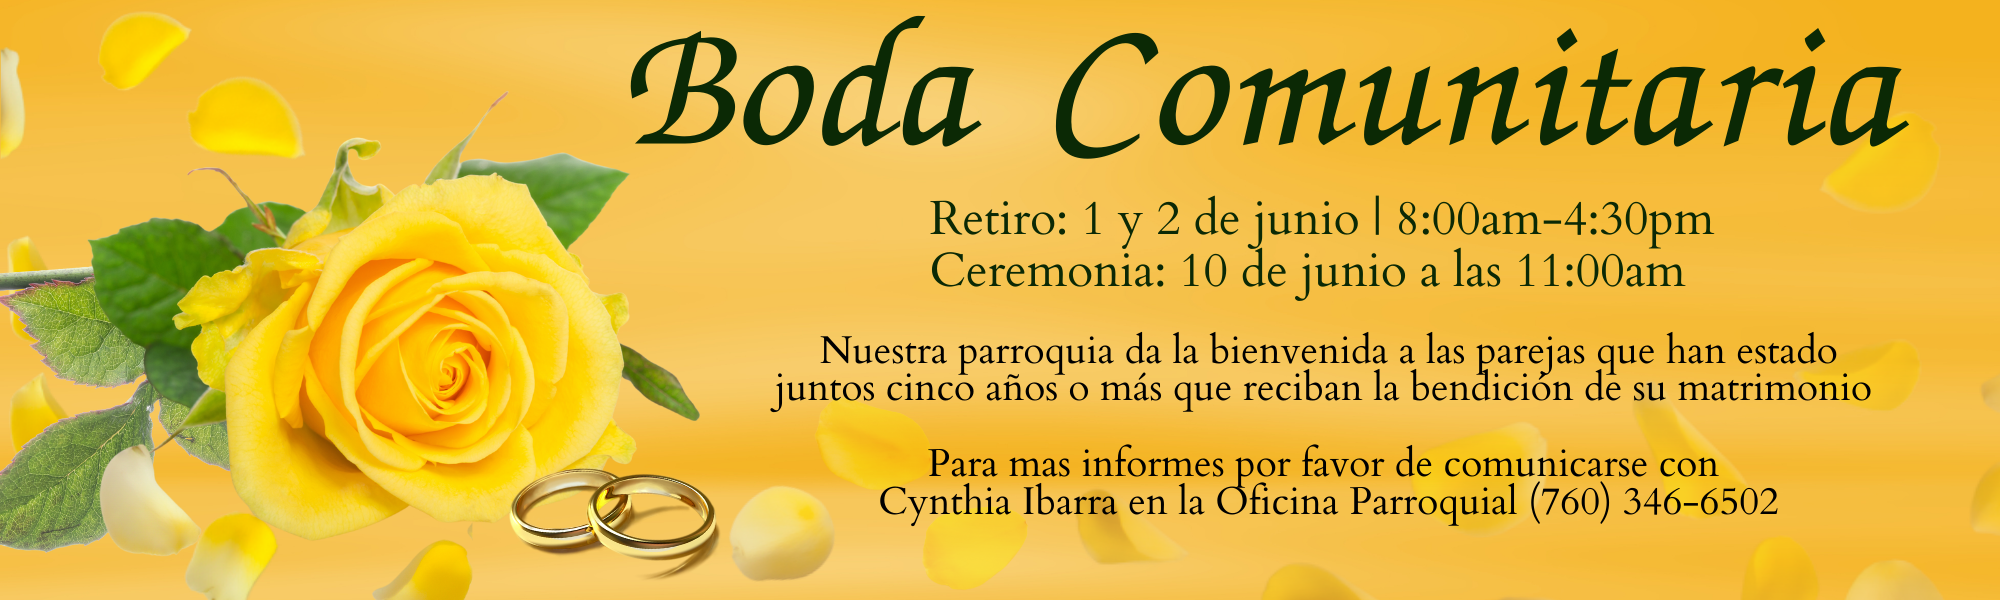 Boda Communitaria retiro sabado 1 junio - domingo 2 junio ceremonia 8 junio